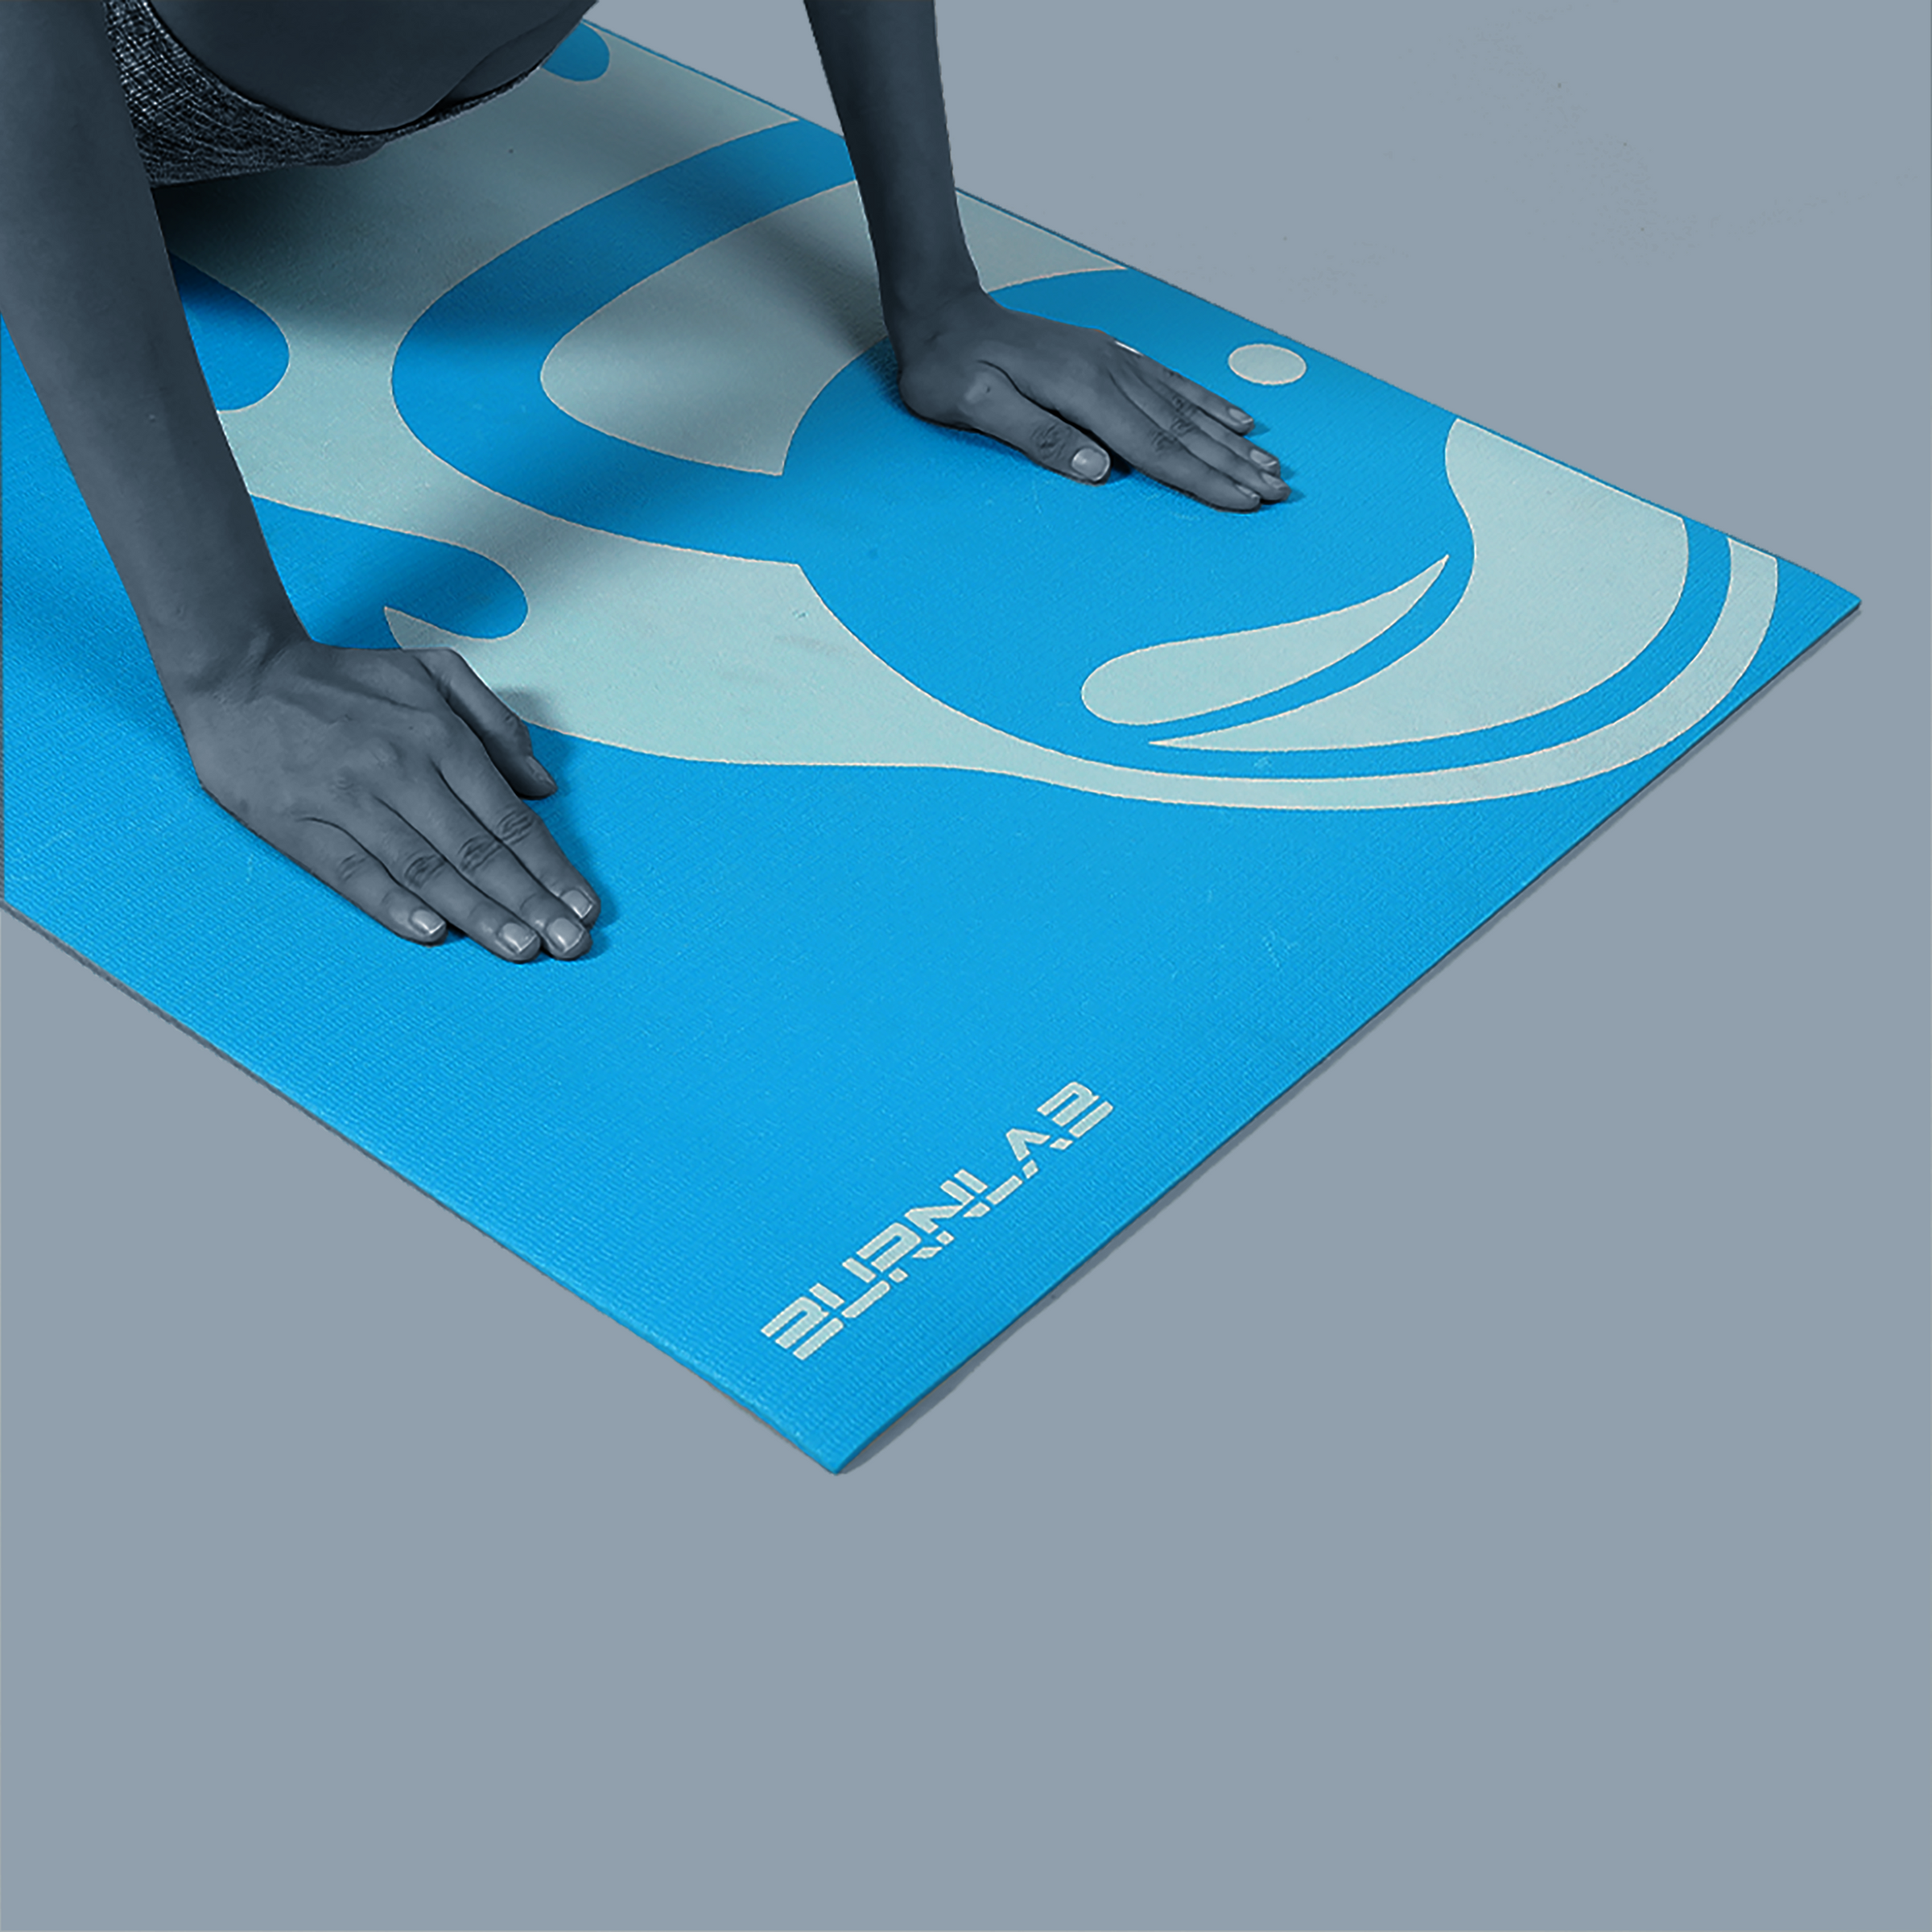 Gruper Yoga Mat Non Slip, Eco Friendly Fitness Exercise Mat with